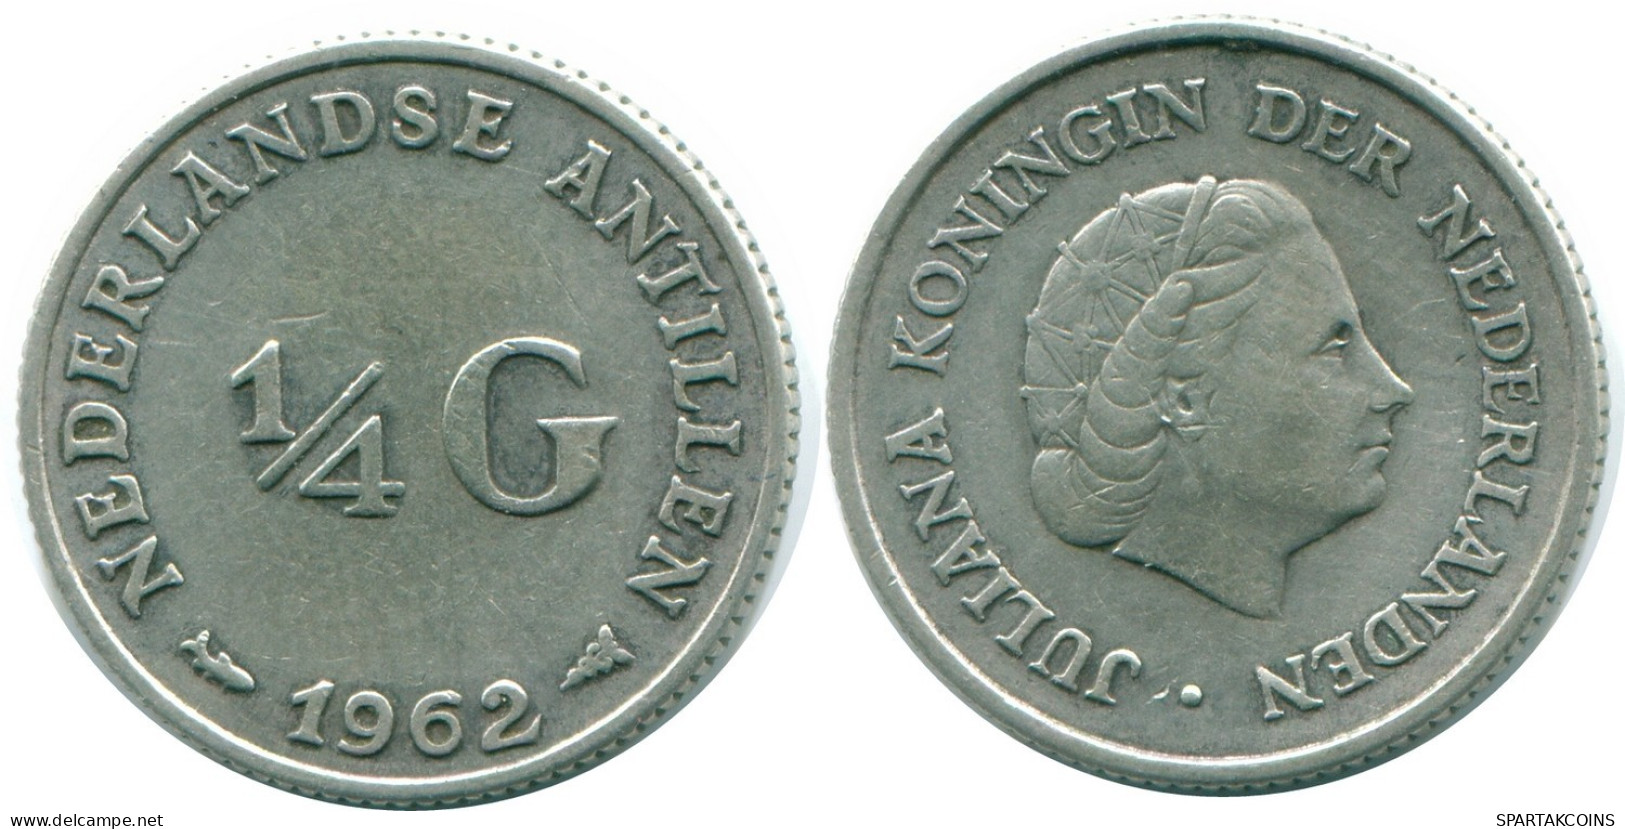 1/4 GULDEN 1962 NETHERLANDS ANTILLES SILVER Colonial Coin #NL11111.4.U.A - Antille Olandesi